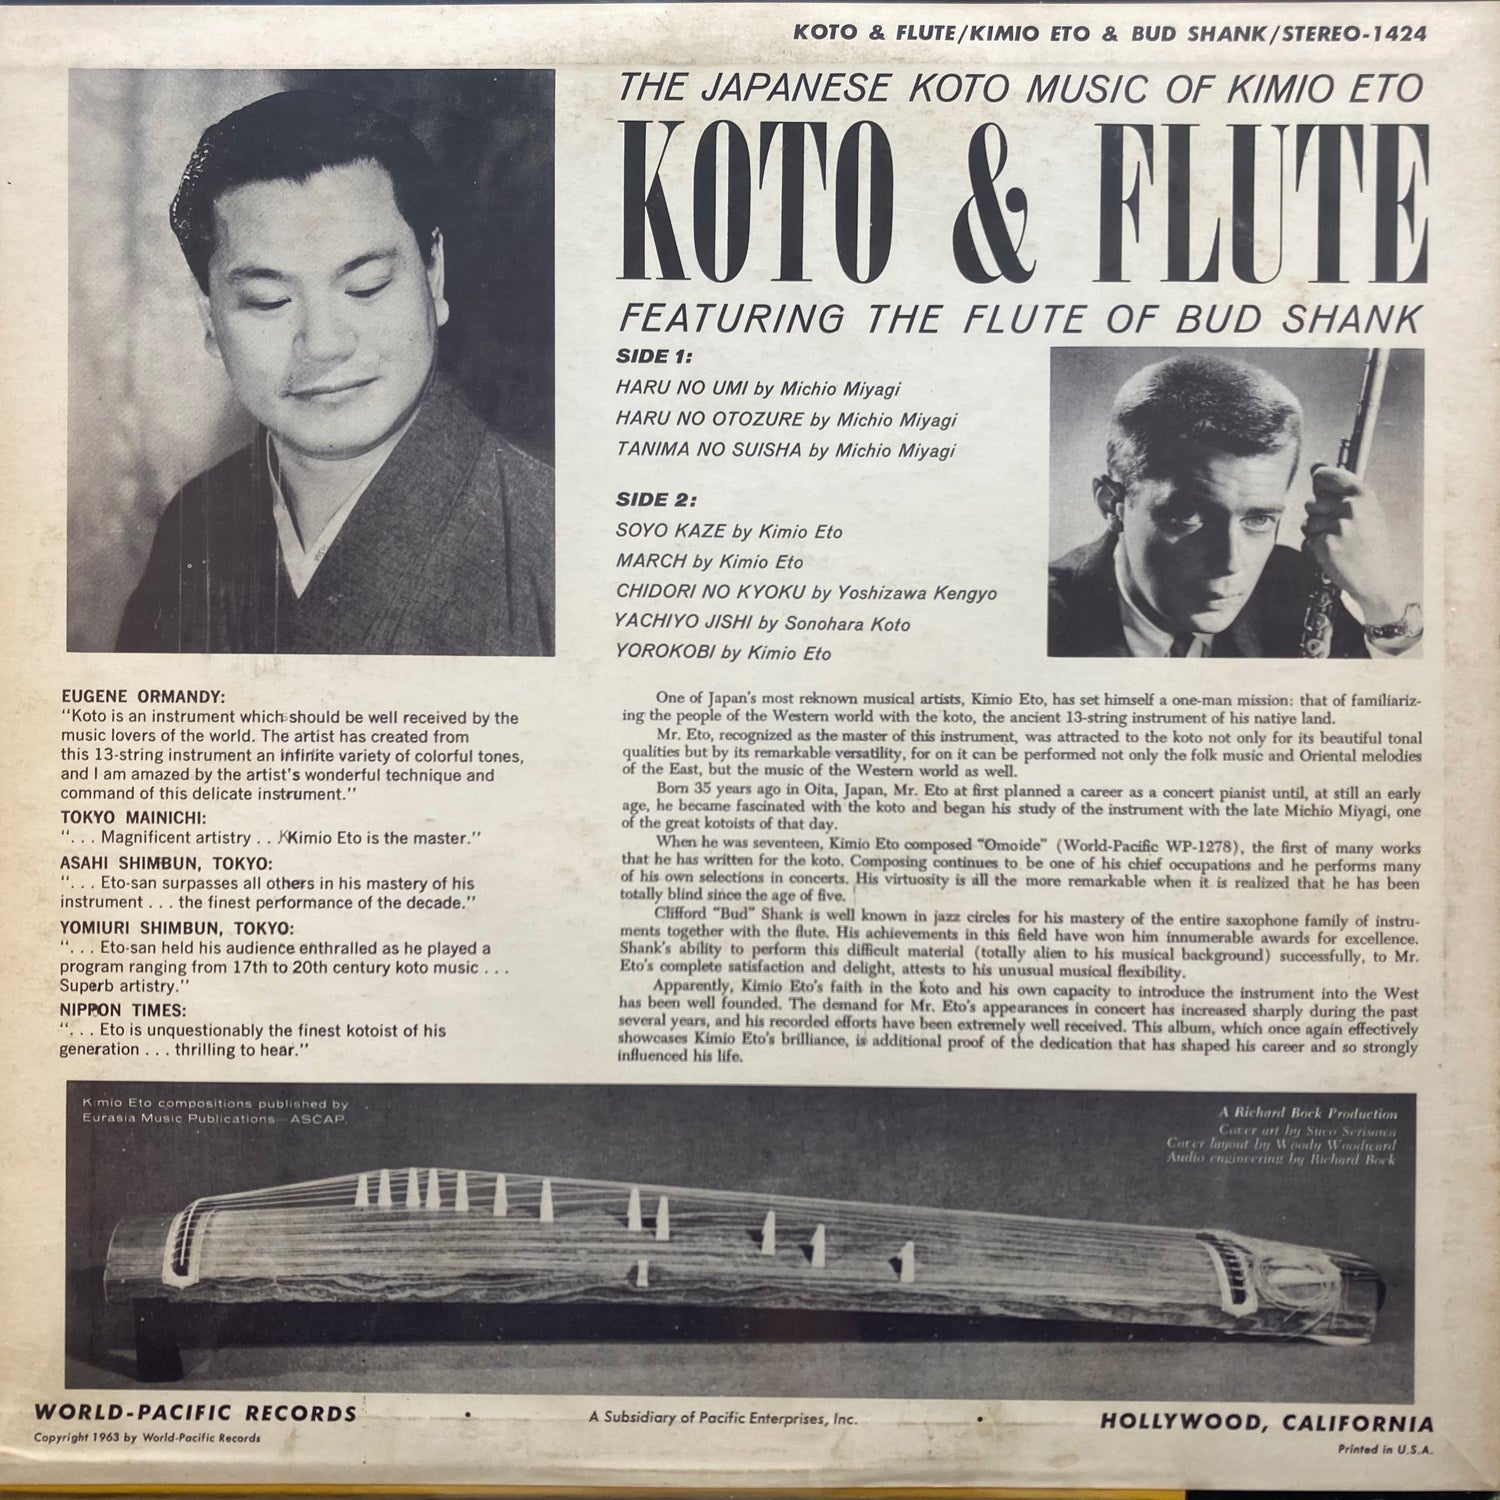 Kimio Eto - Koto & Flute featuring Bud Shank